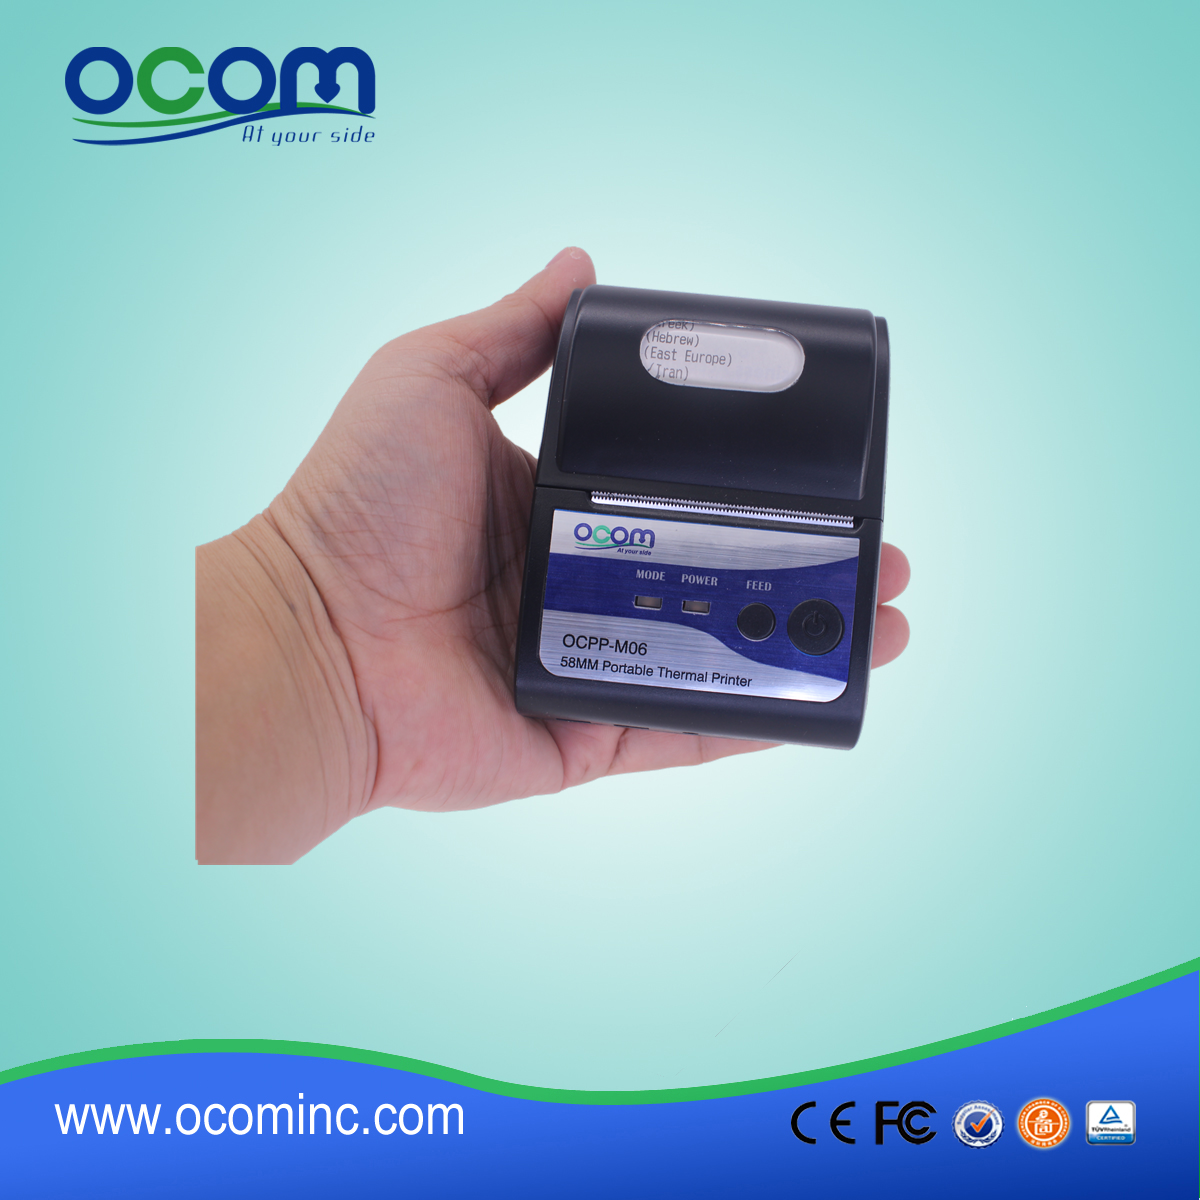 OCPP -M06 Εκτυπωτής θερμικής απόδειξης μίνι και μπλε Bluetooth